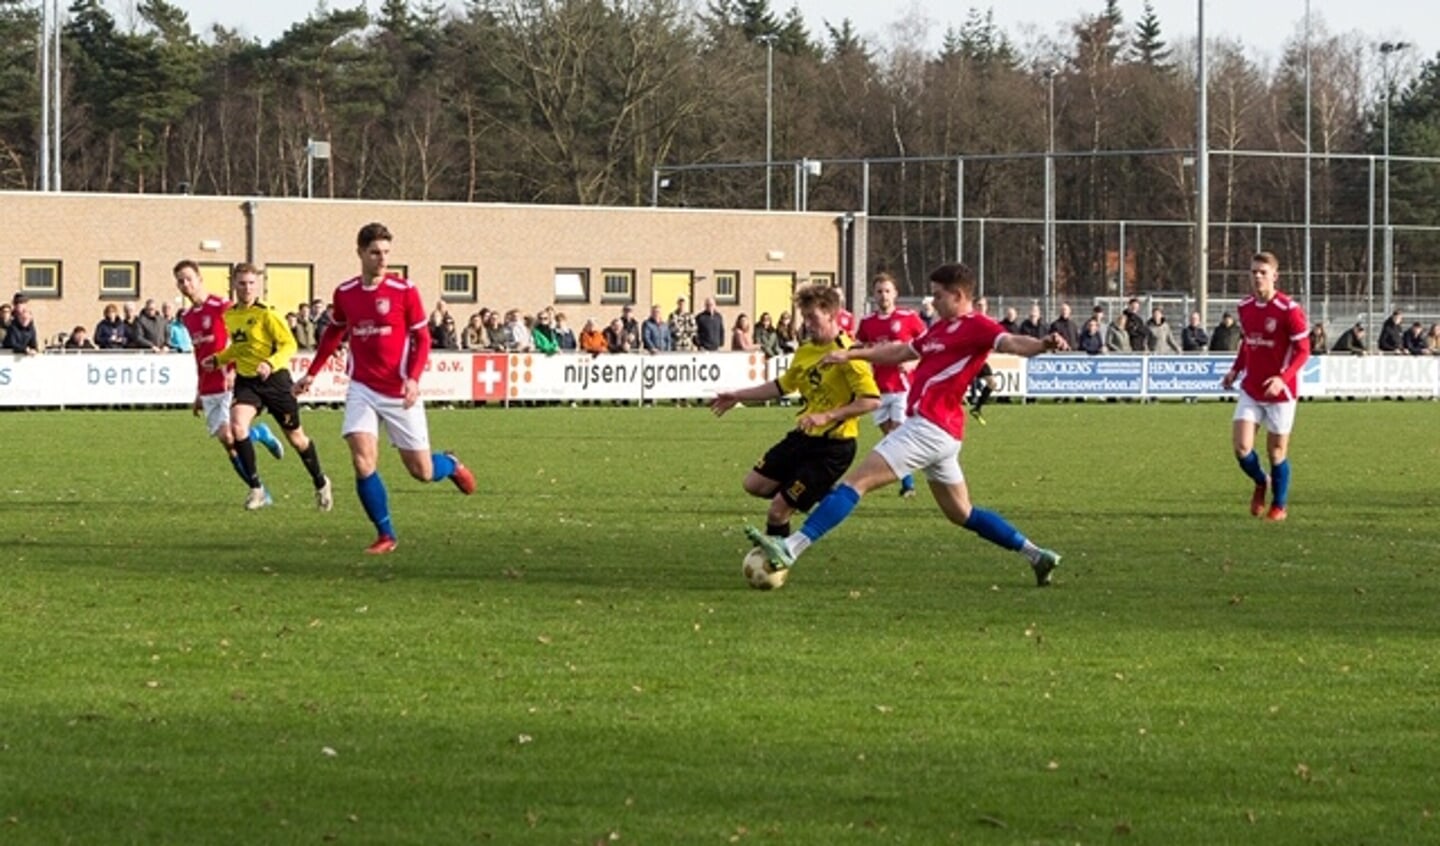 SV Venray won zondag de derby tegen SSS'18: 0-1. 